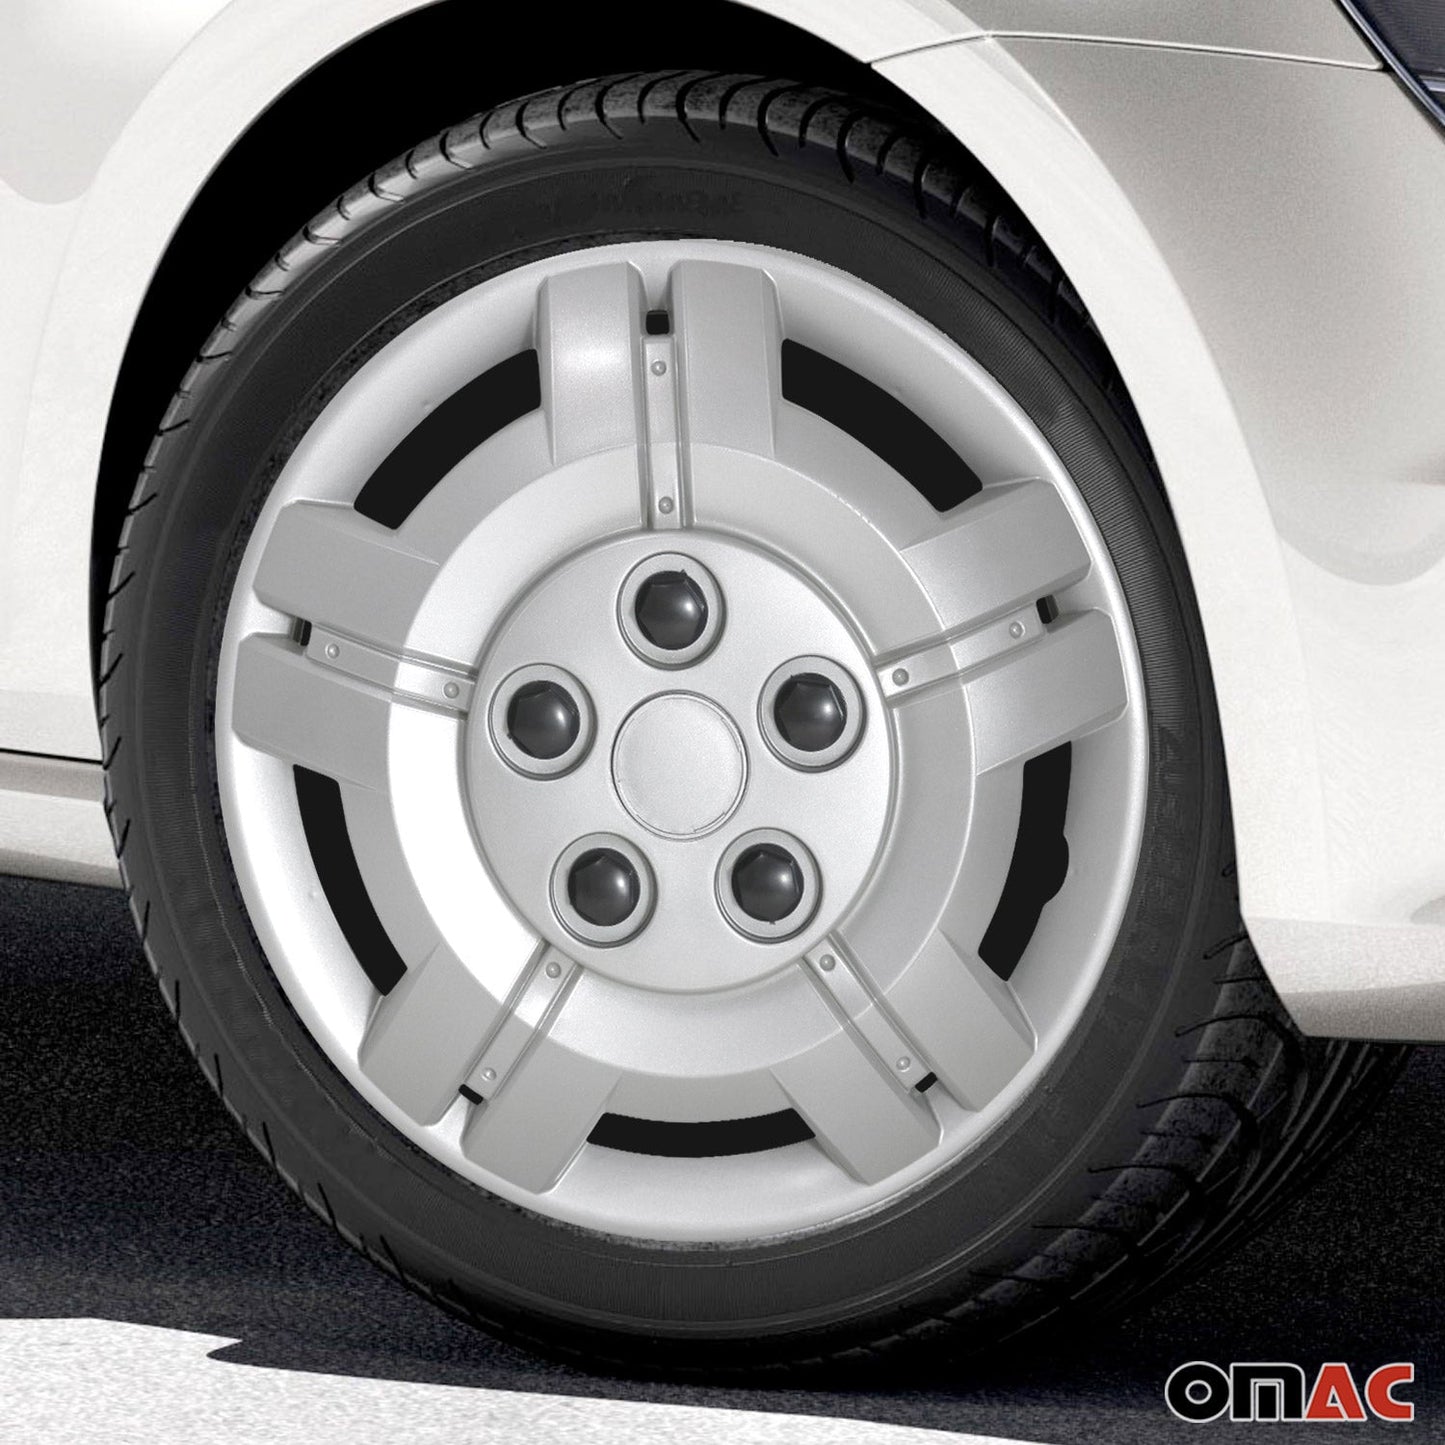 OMAC 15" Hubcaps Wheel Covers for Kia Forte Silver Gray U029981